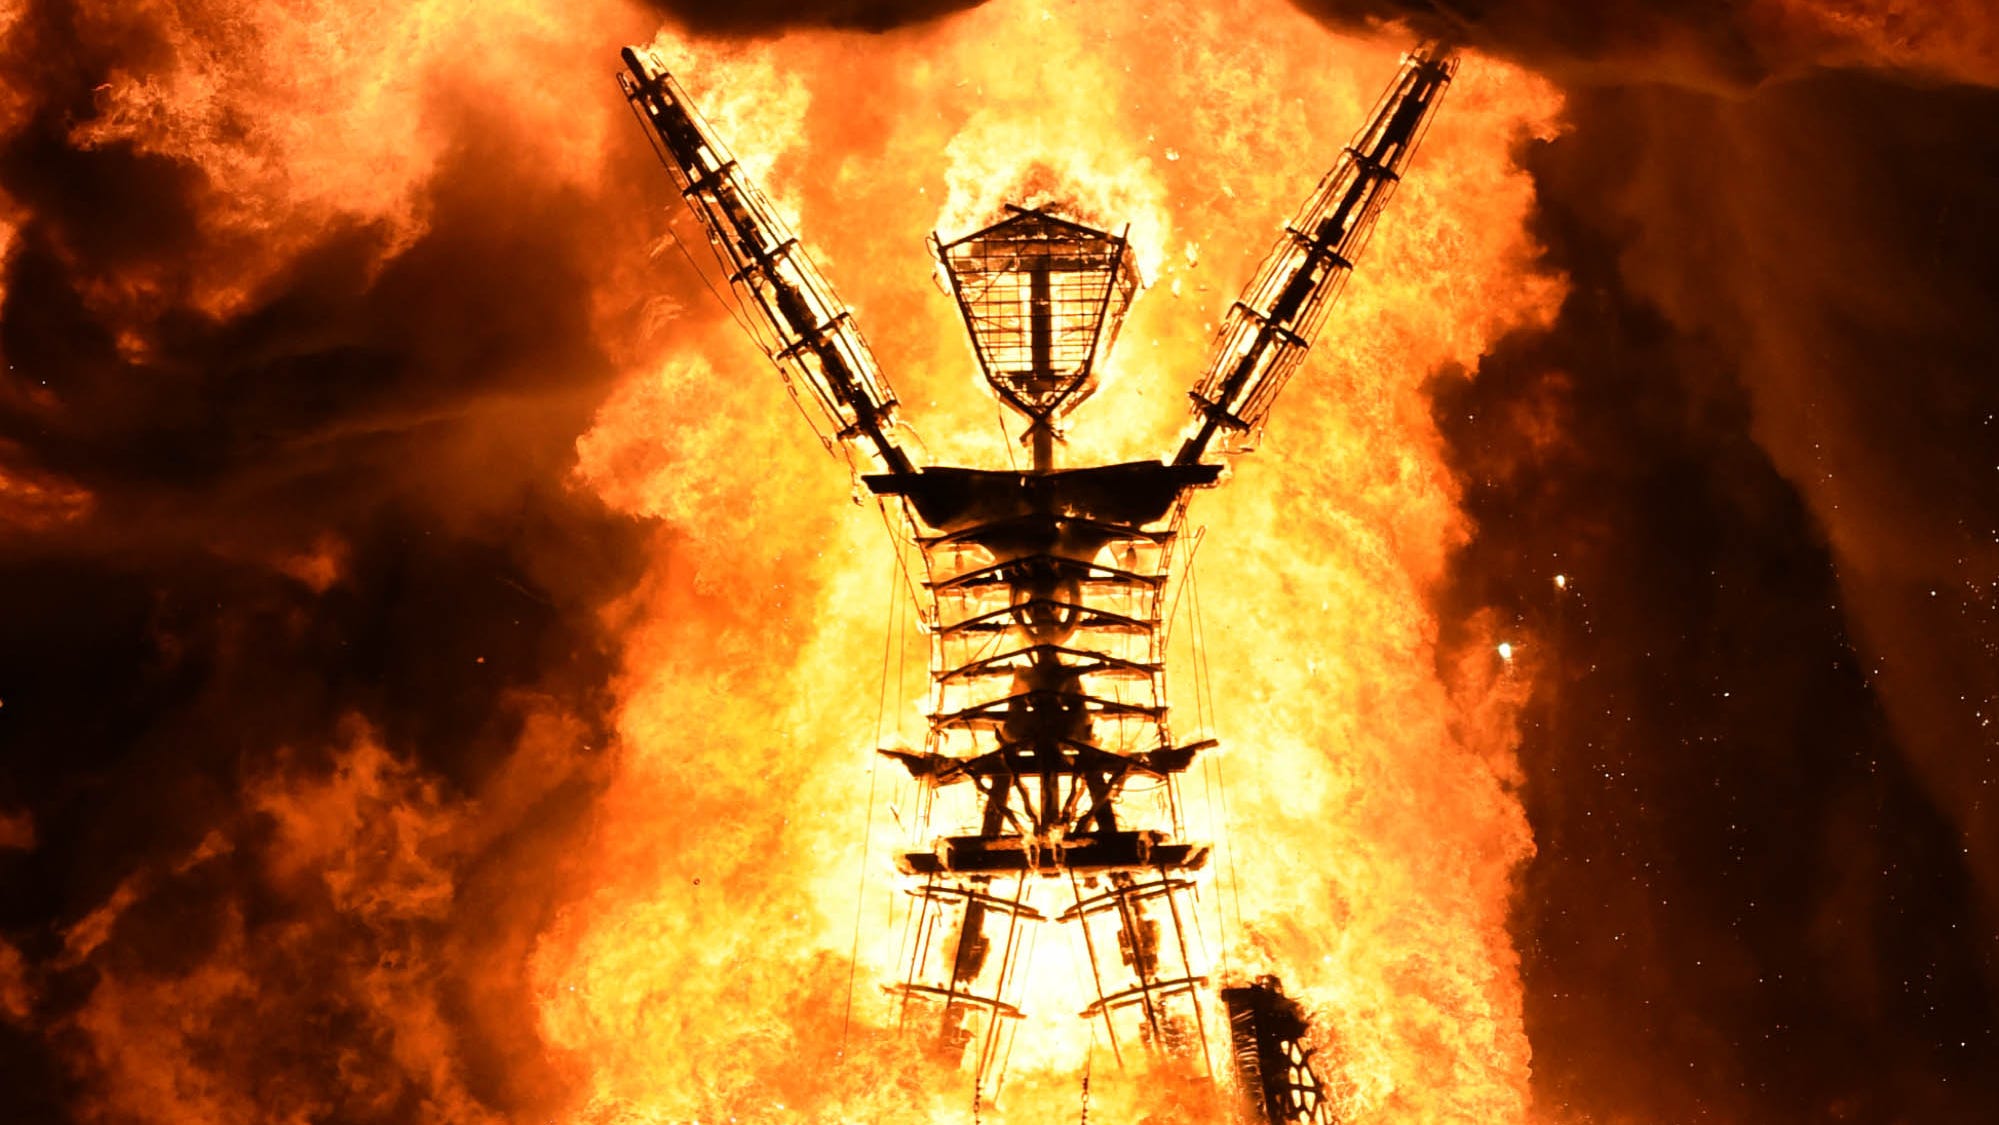 Burning Man 2019 Watch The Man Burn In Spectacular Display